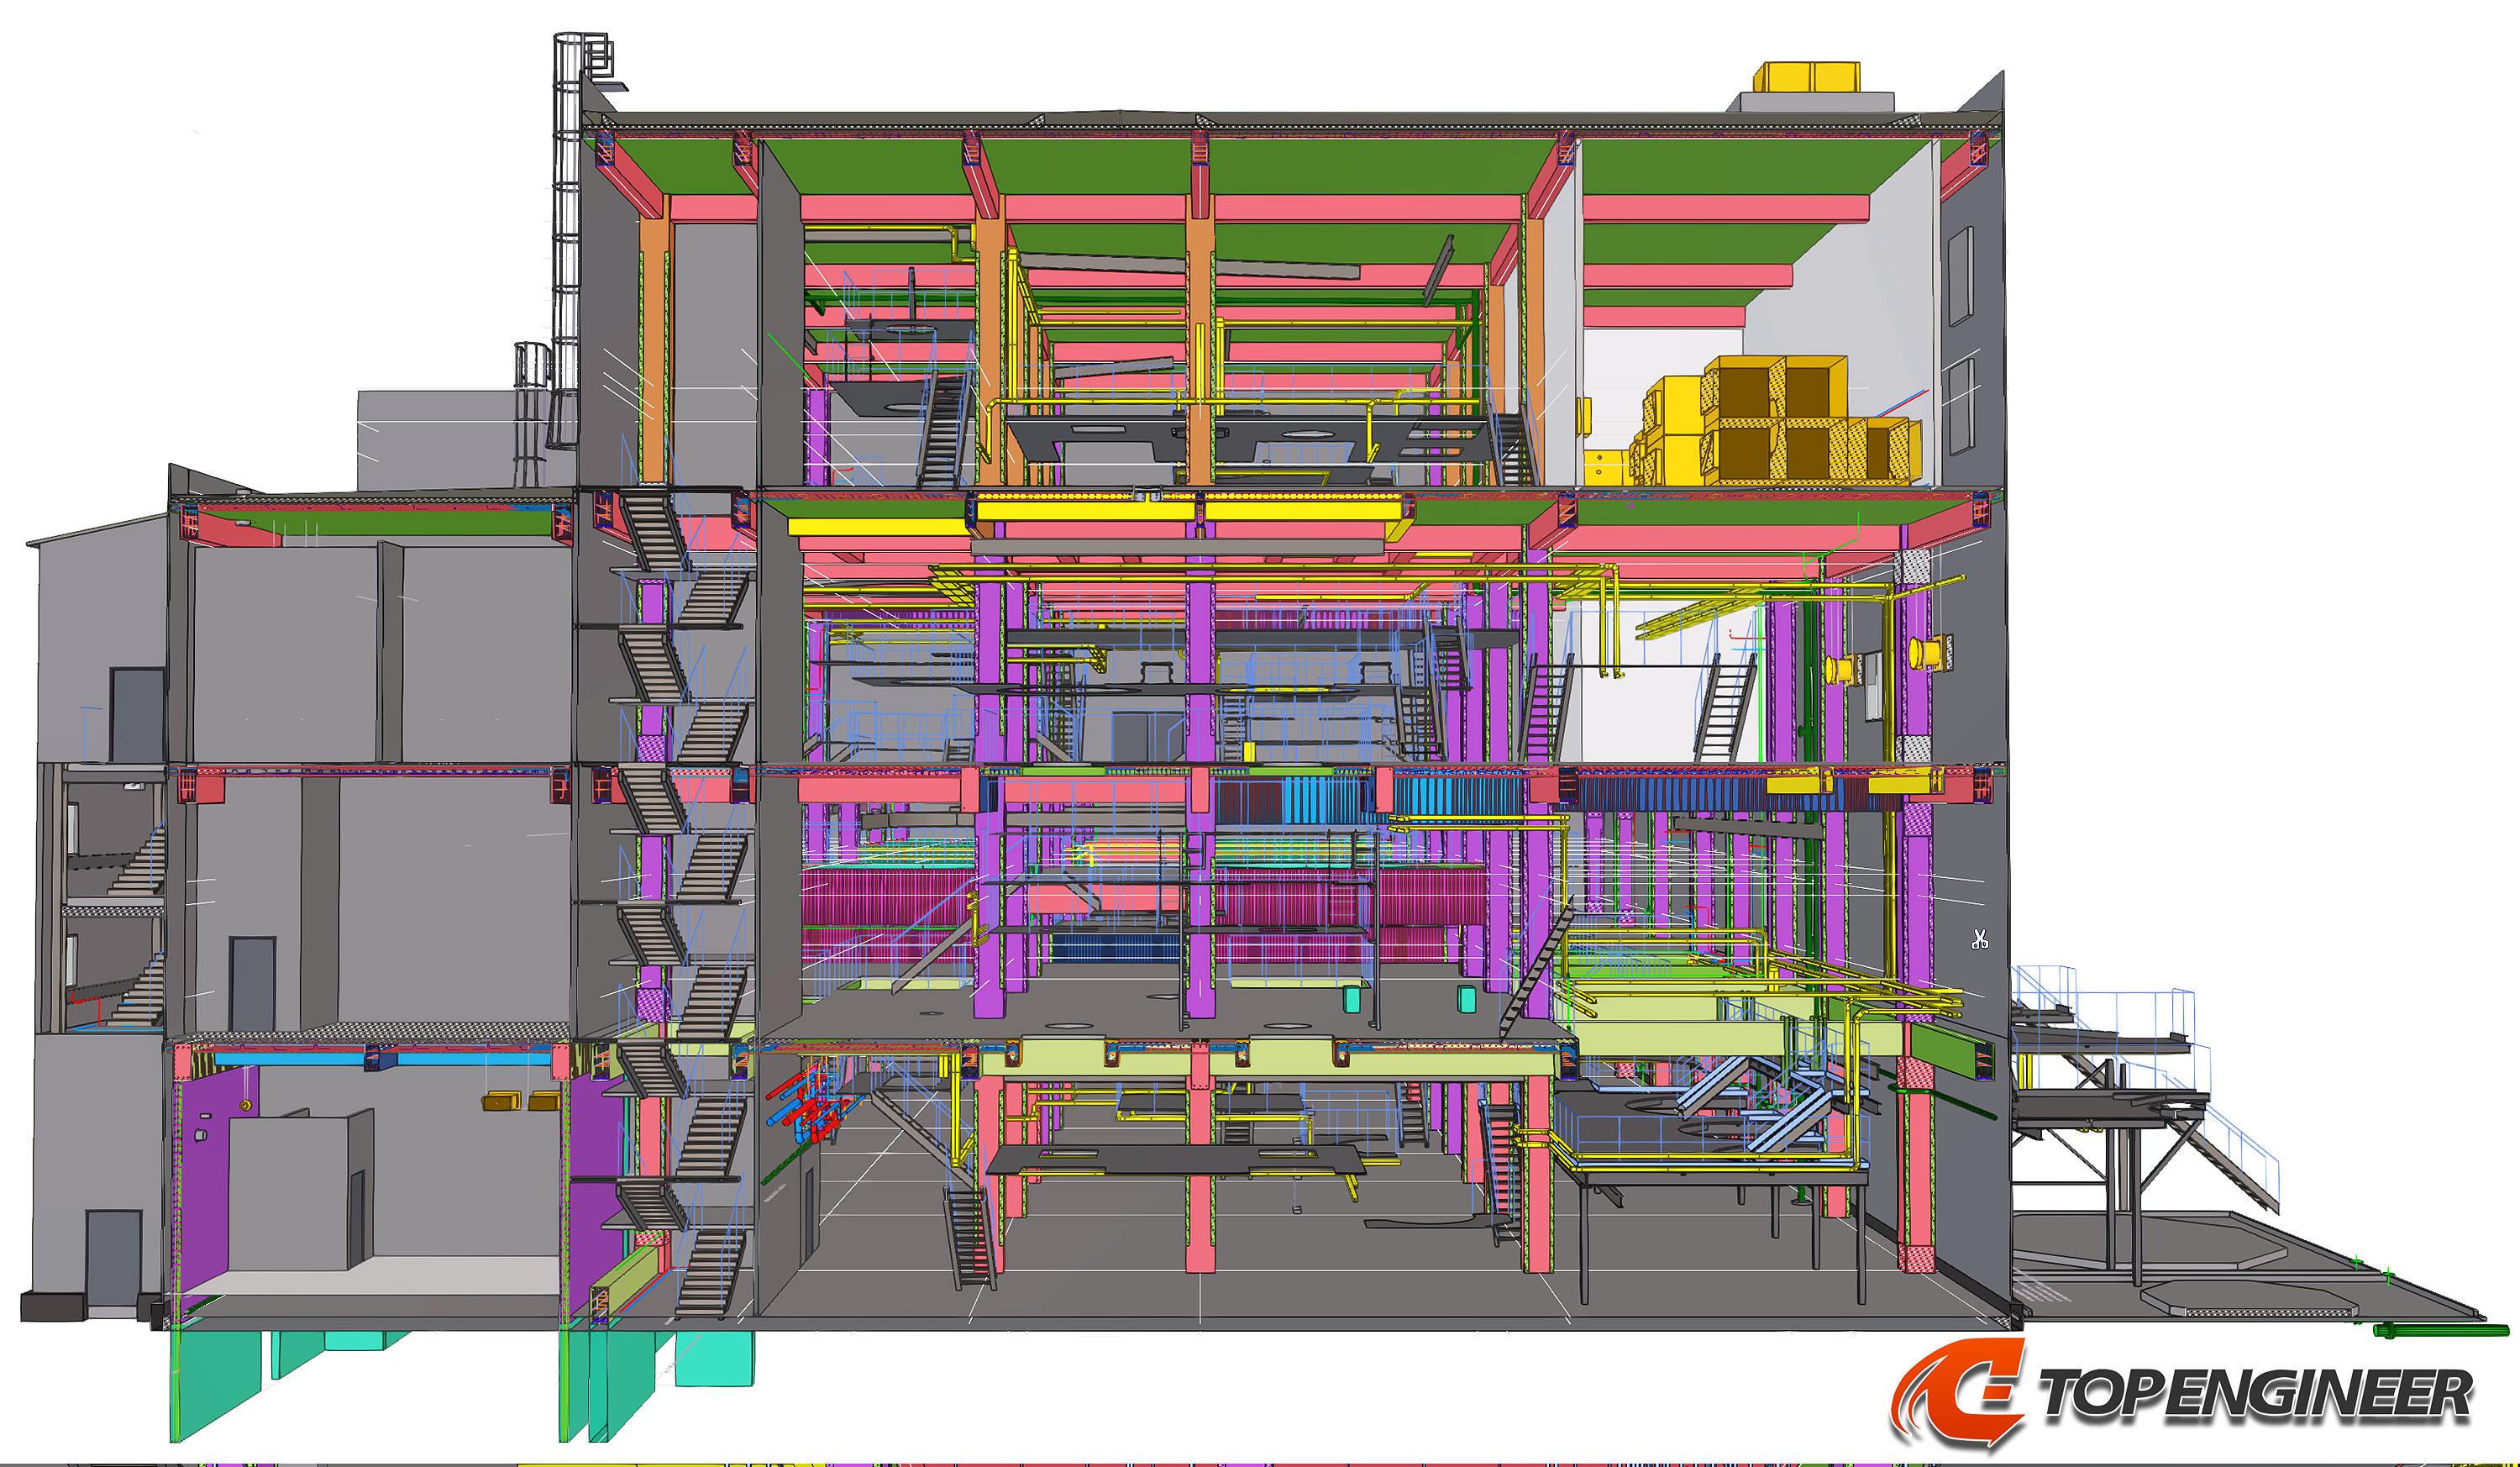 BIM model for production building in Tekla Structures